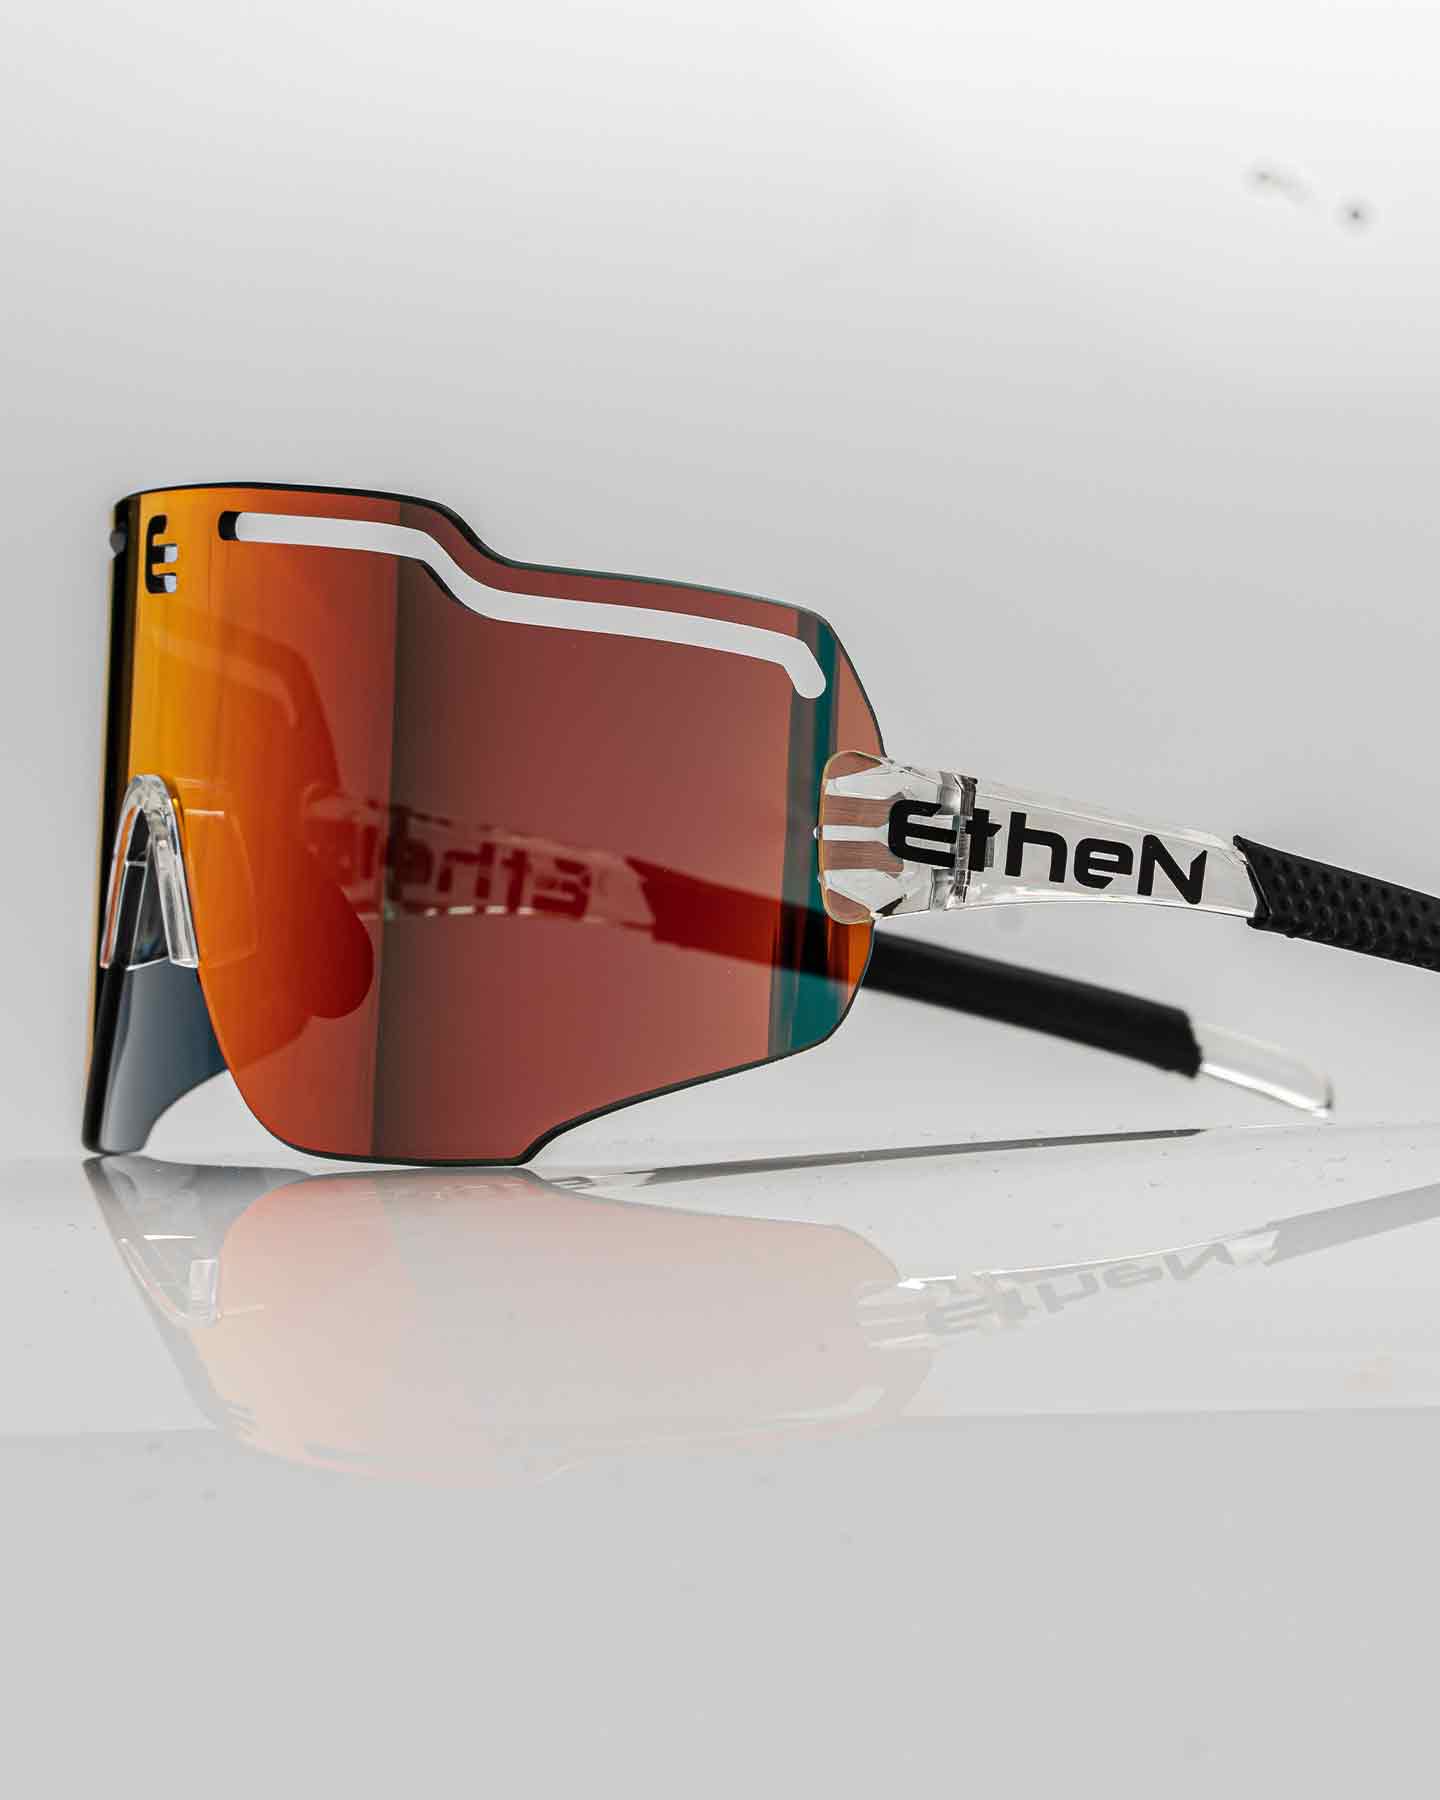 motocross-dorno-home-page-wd-racing-shop-ethen-astro-sunglasses-02